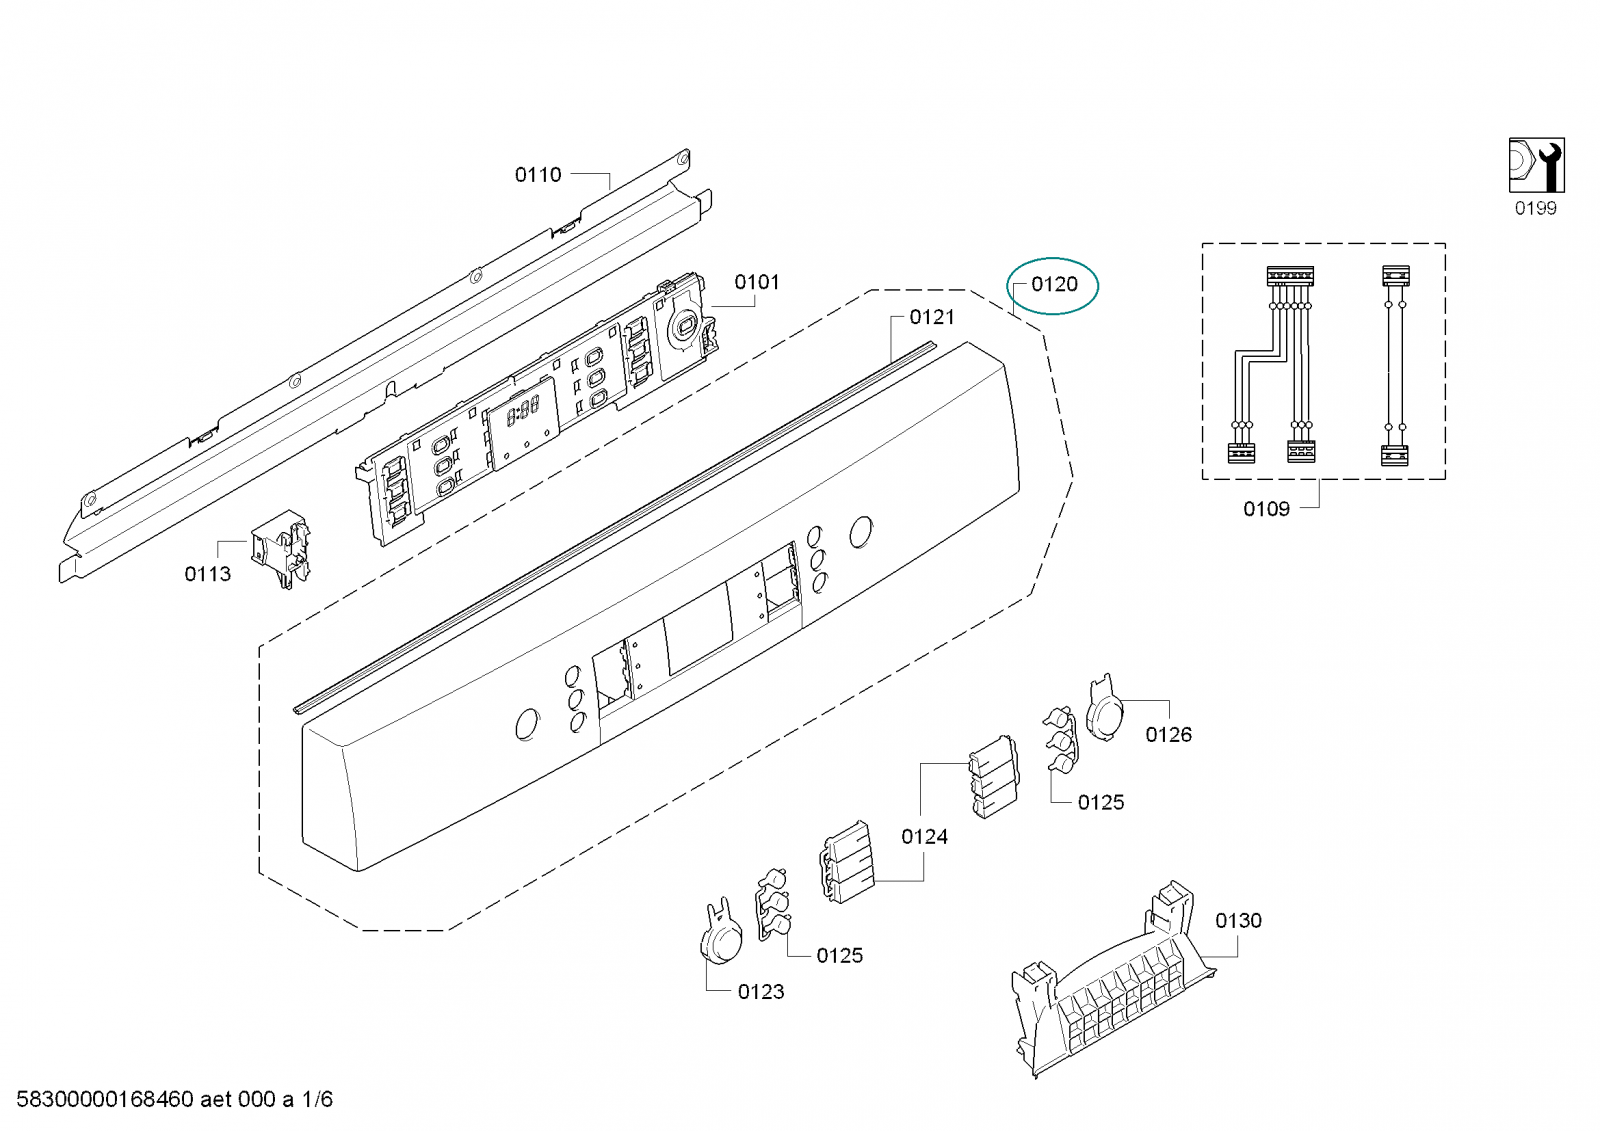 Front Control Panel Frame (Stainless) for Bosch Siemens Dishwashers - Part nr. BSH 00744289 BSH - Bosch / Siemens